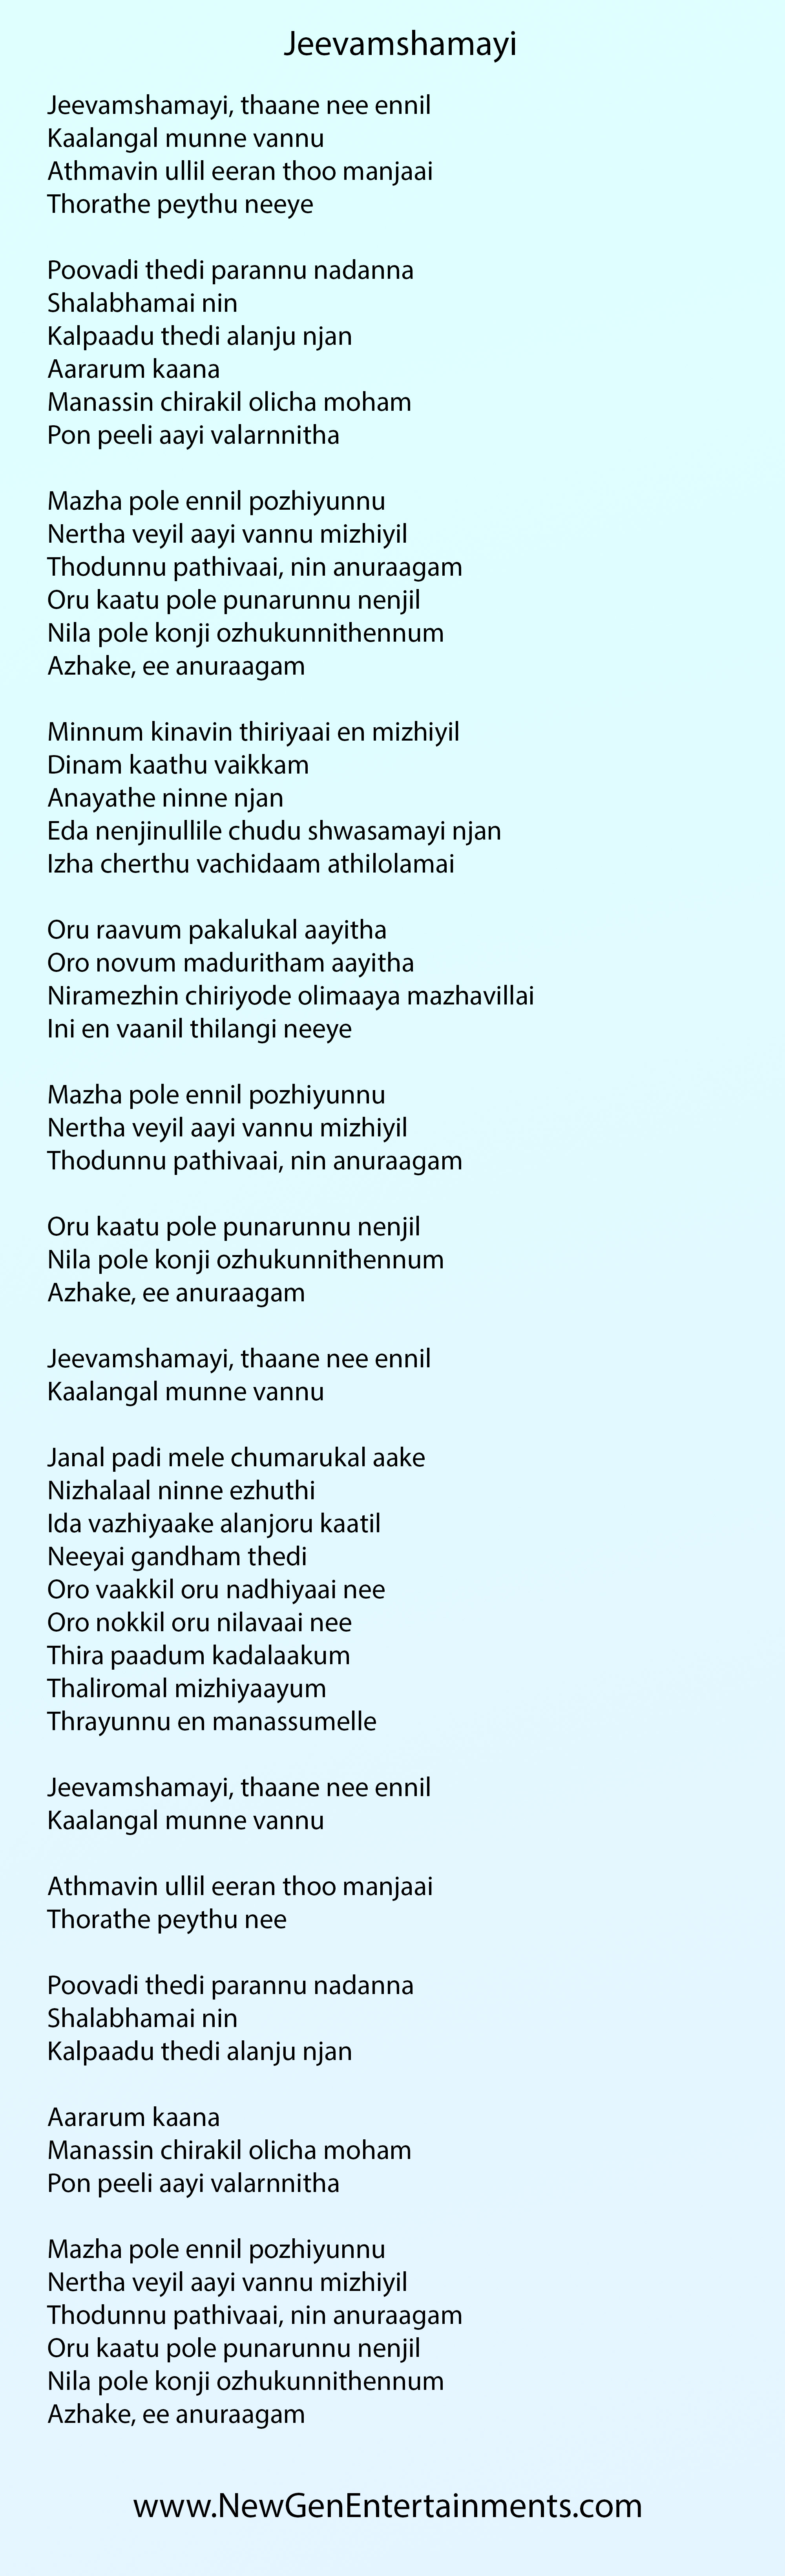 Lyrics Center Malayalam Song Lyrics Images En munnil vannoru aakasha varthingalo ariyukille. lyrics center malayalam song lyrics images